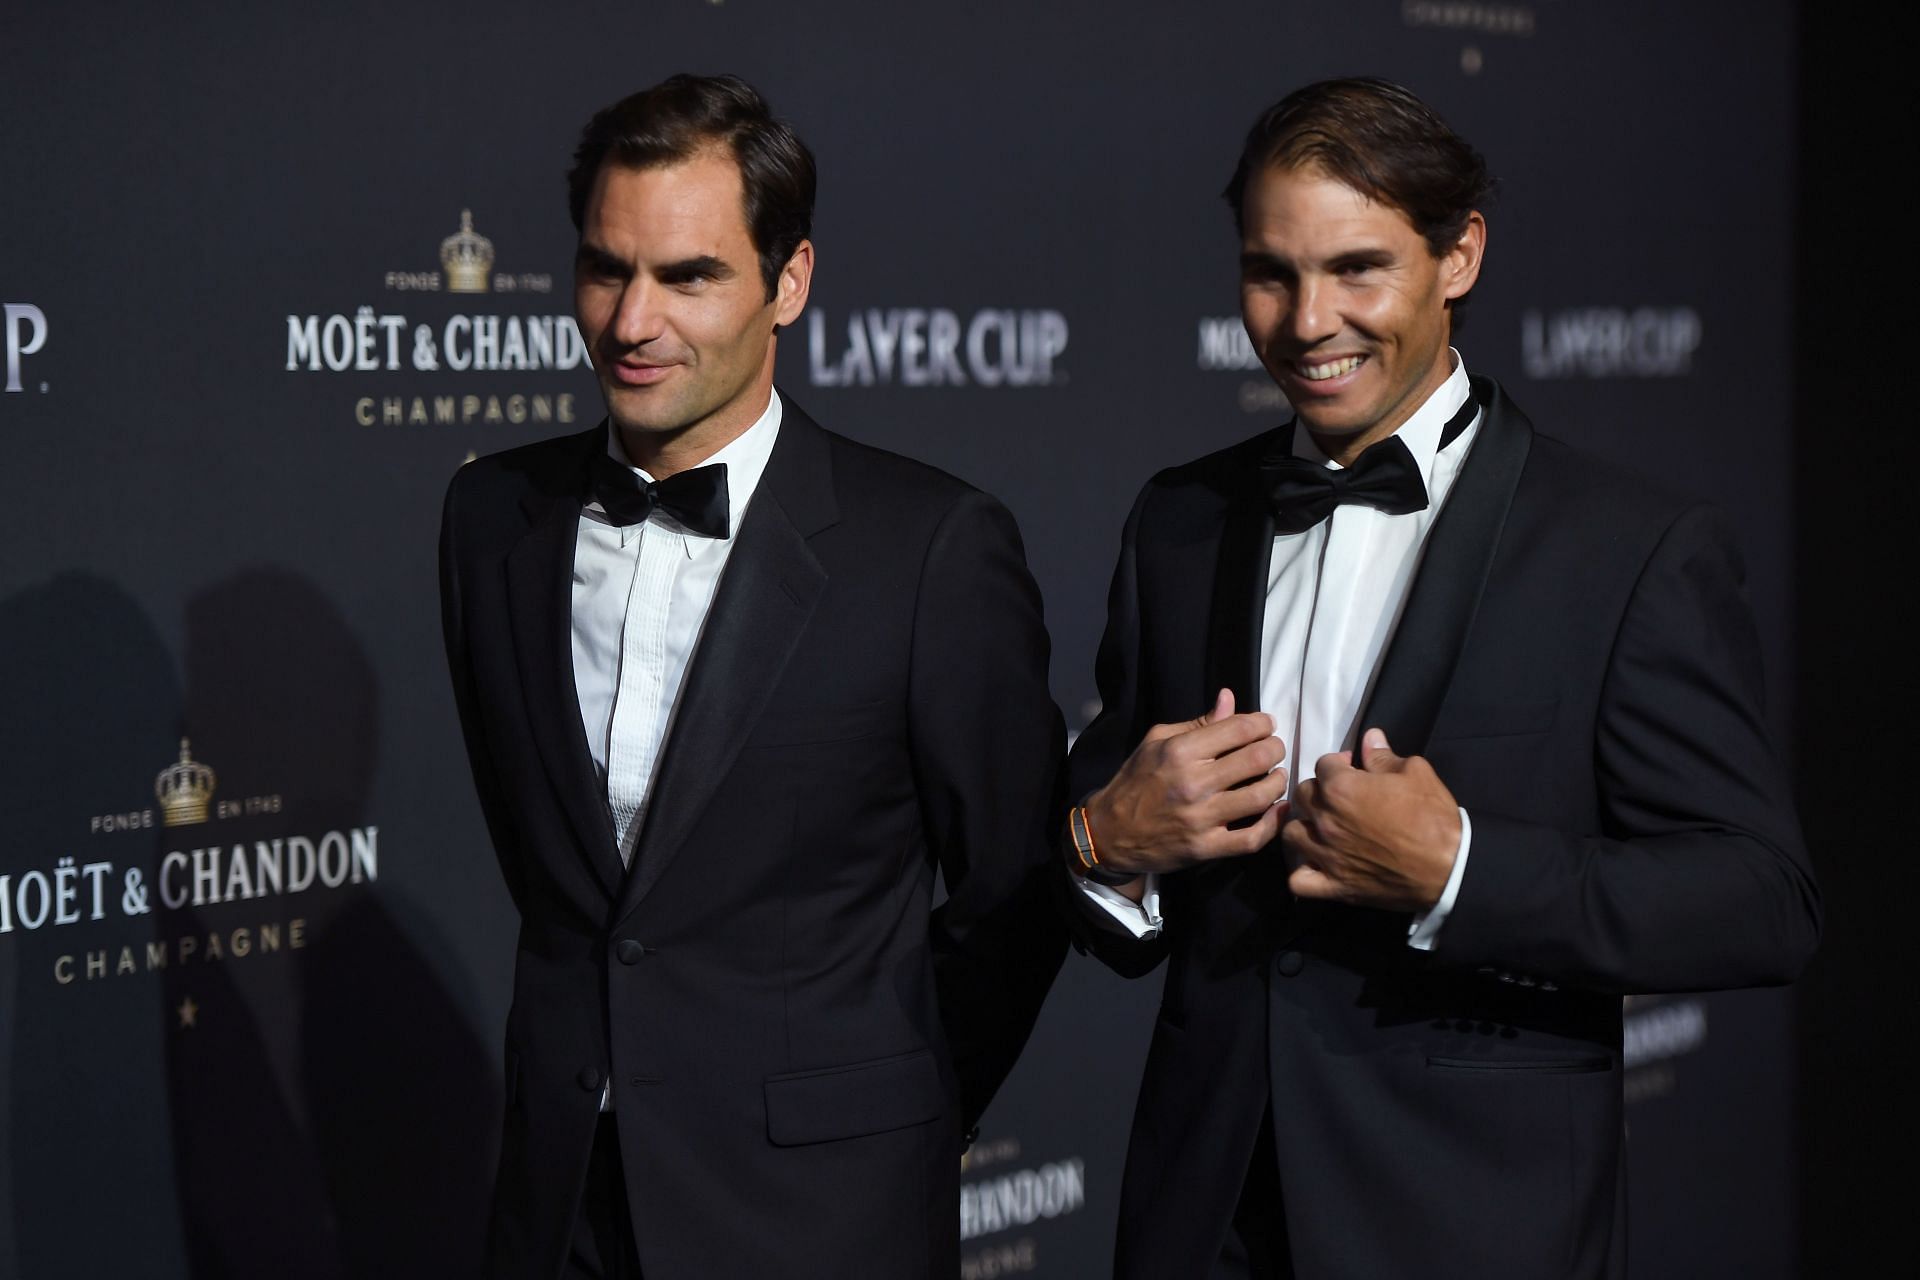 Either Roger Federer or Rafael Nadal has won the Stefan Edberg Sportsmanship Award since 2004